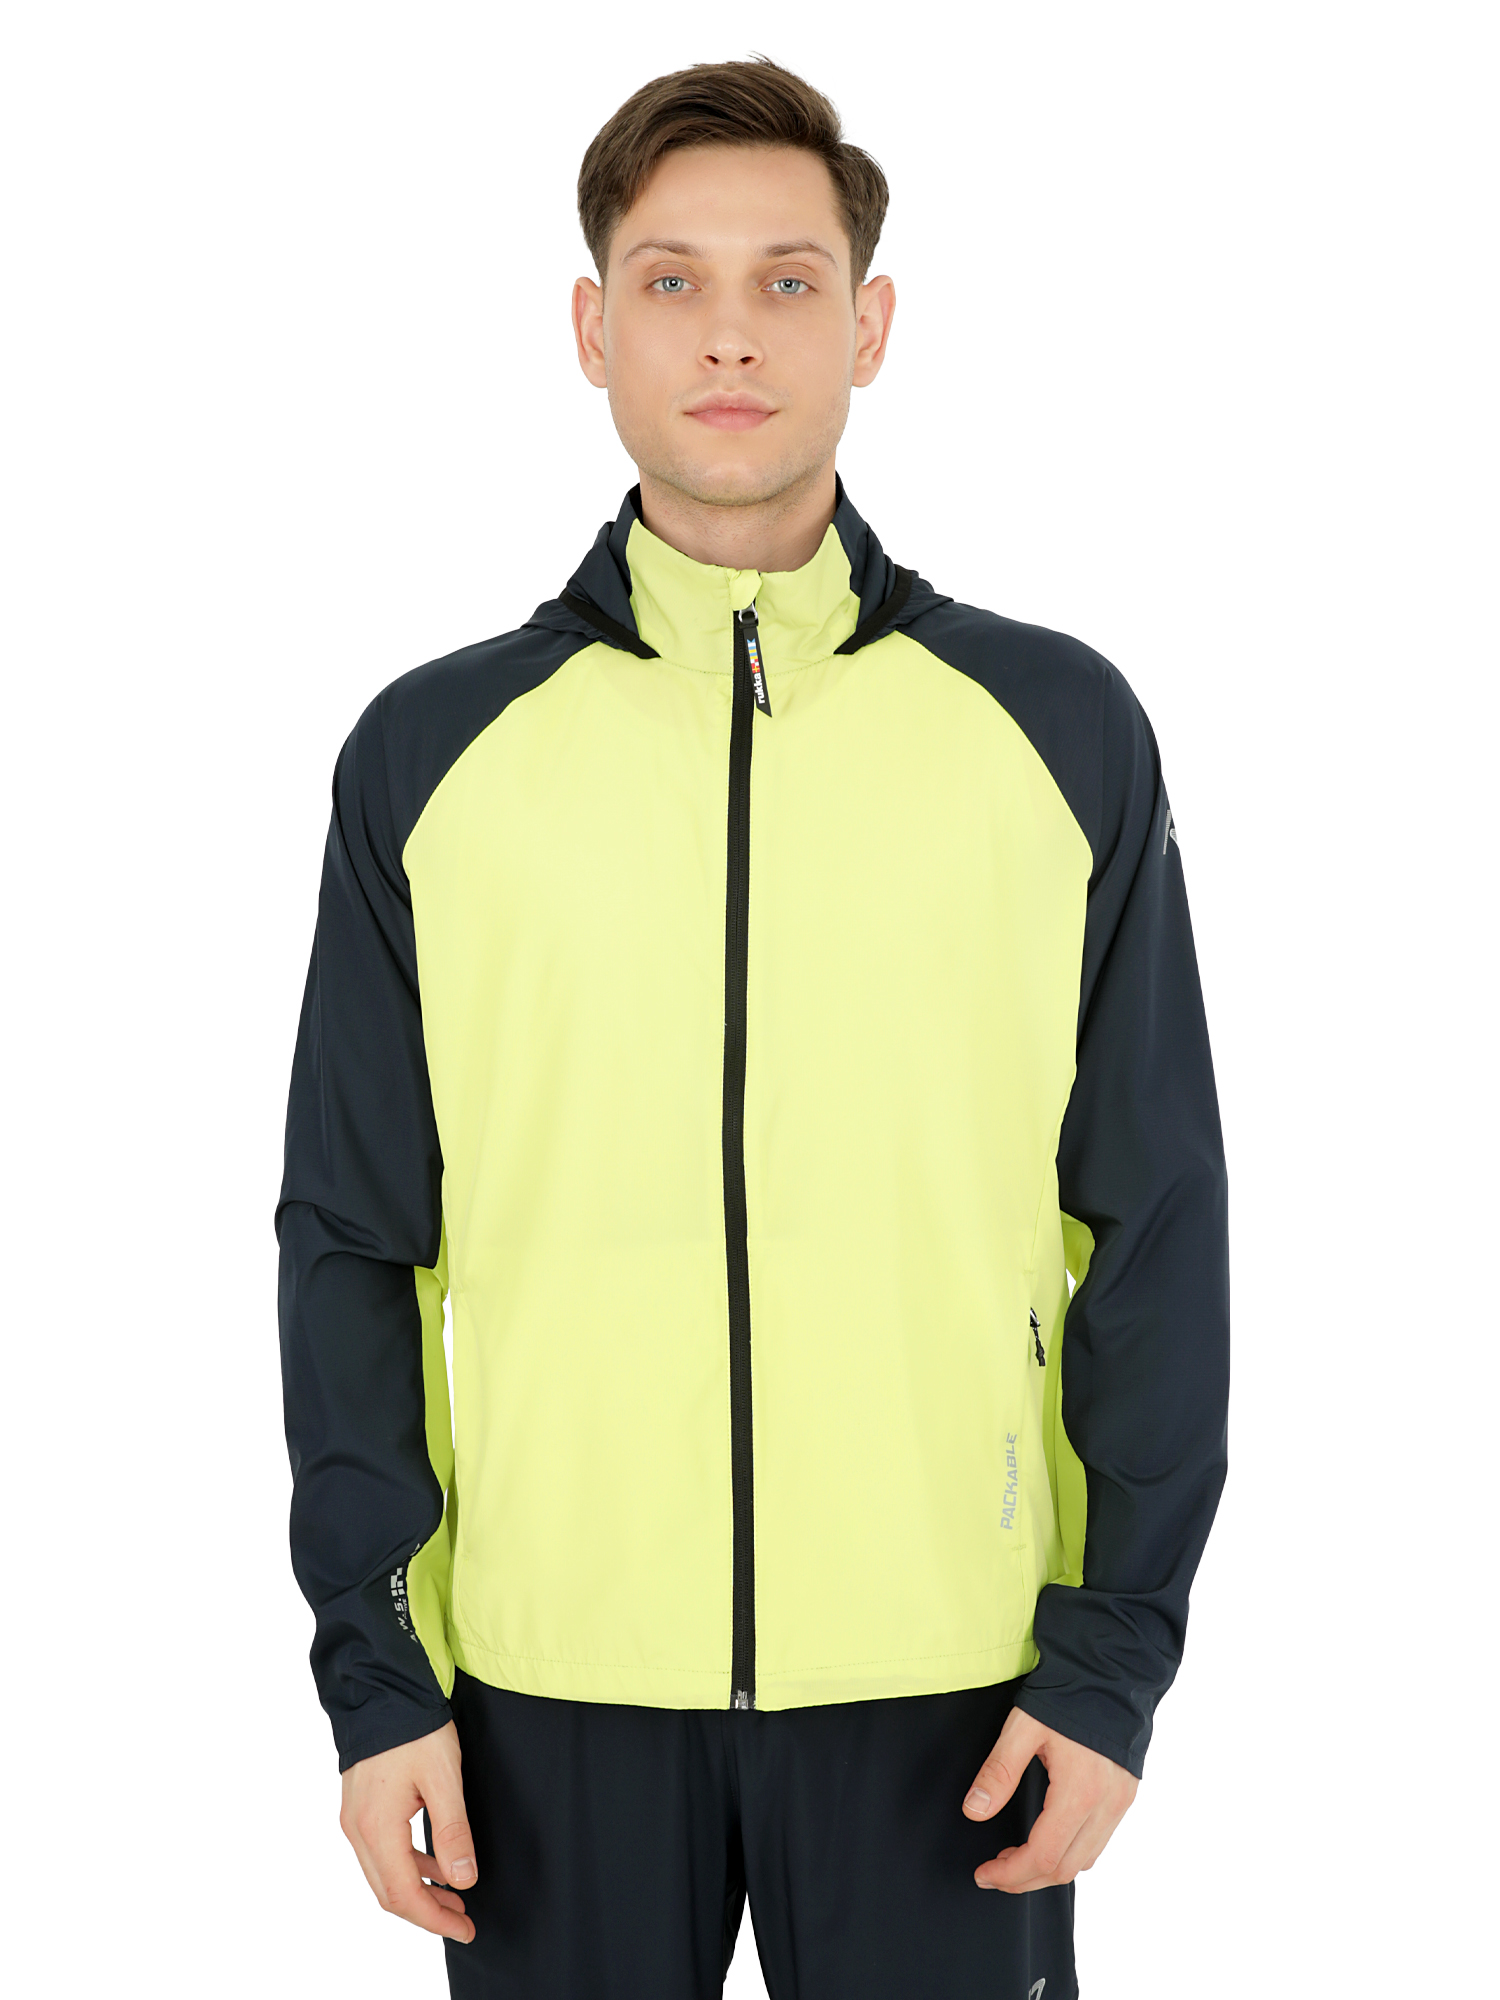 Куртка мужская Rukka Meskila желтая XL